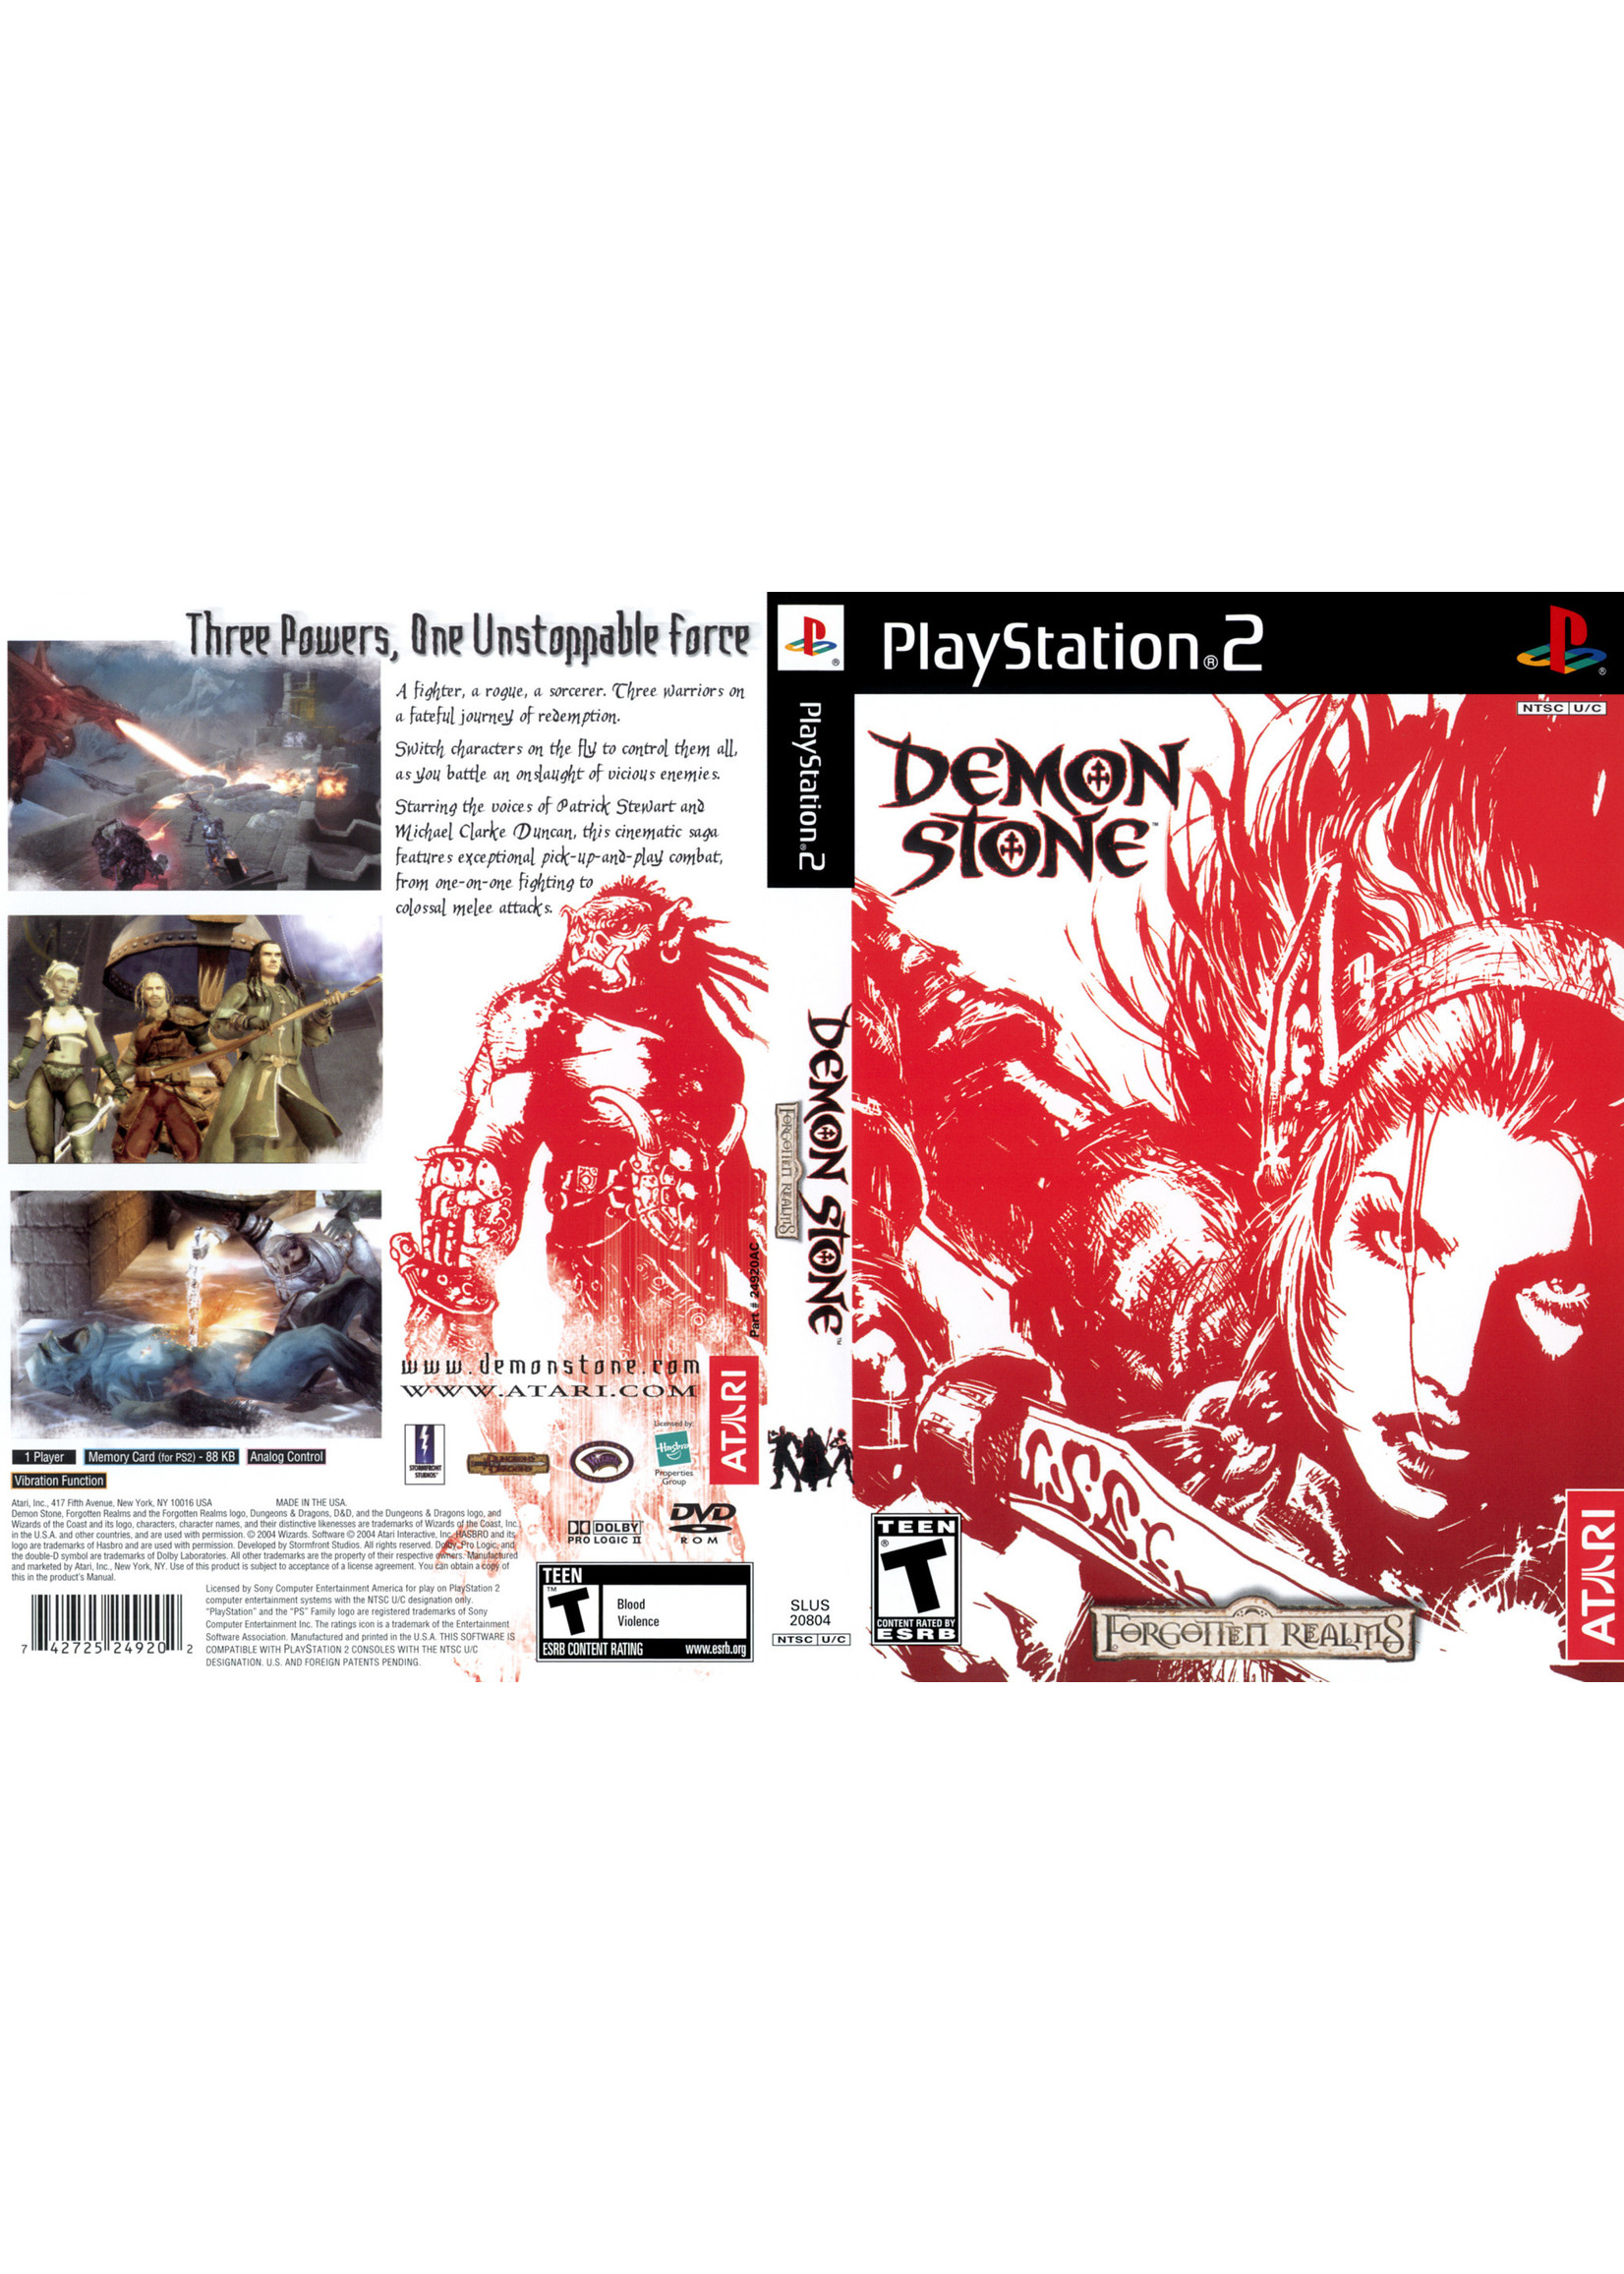 Sony Playstation 2 (PS2) Demon Stone